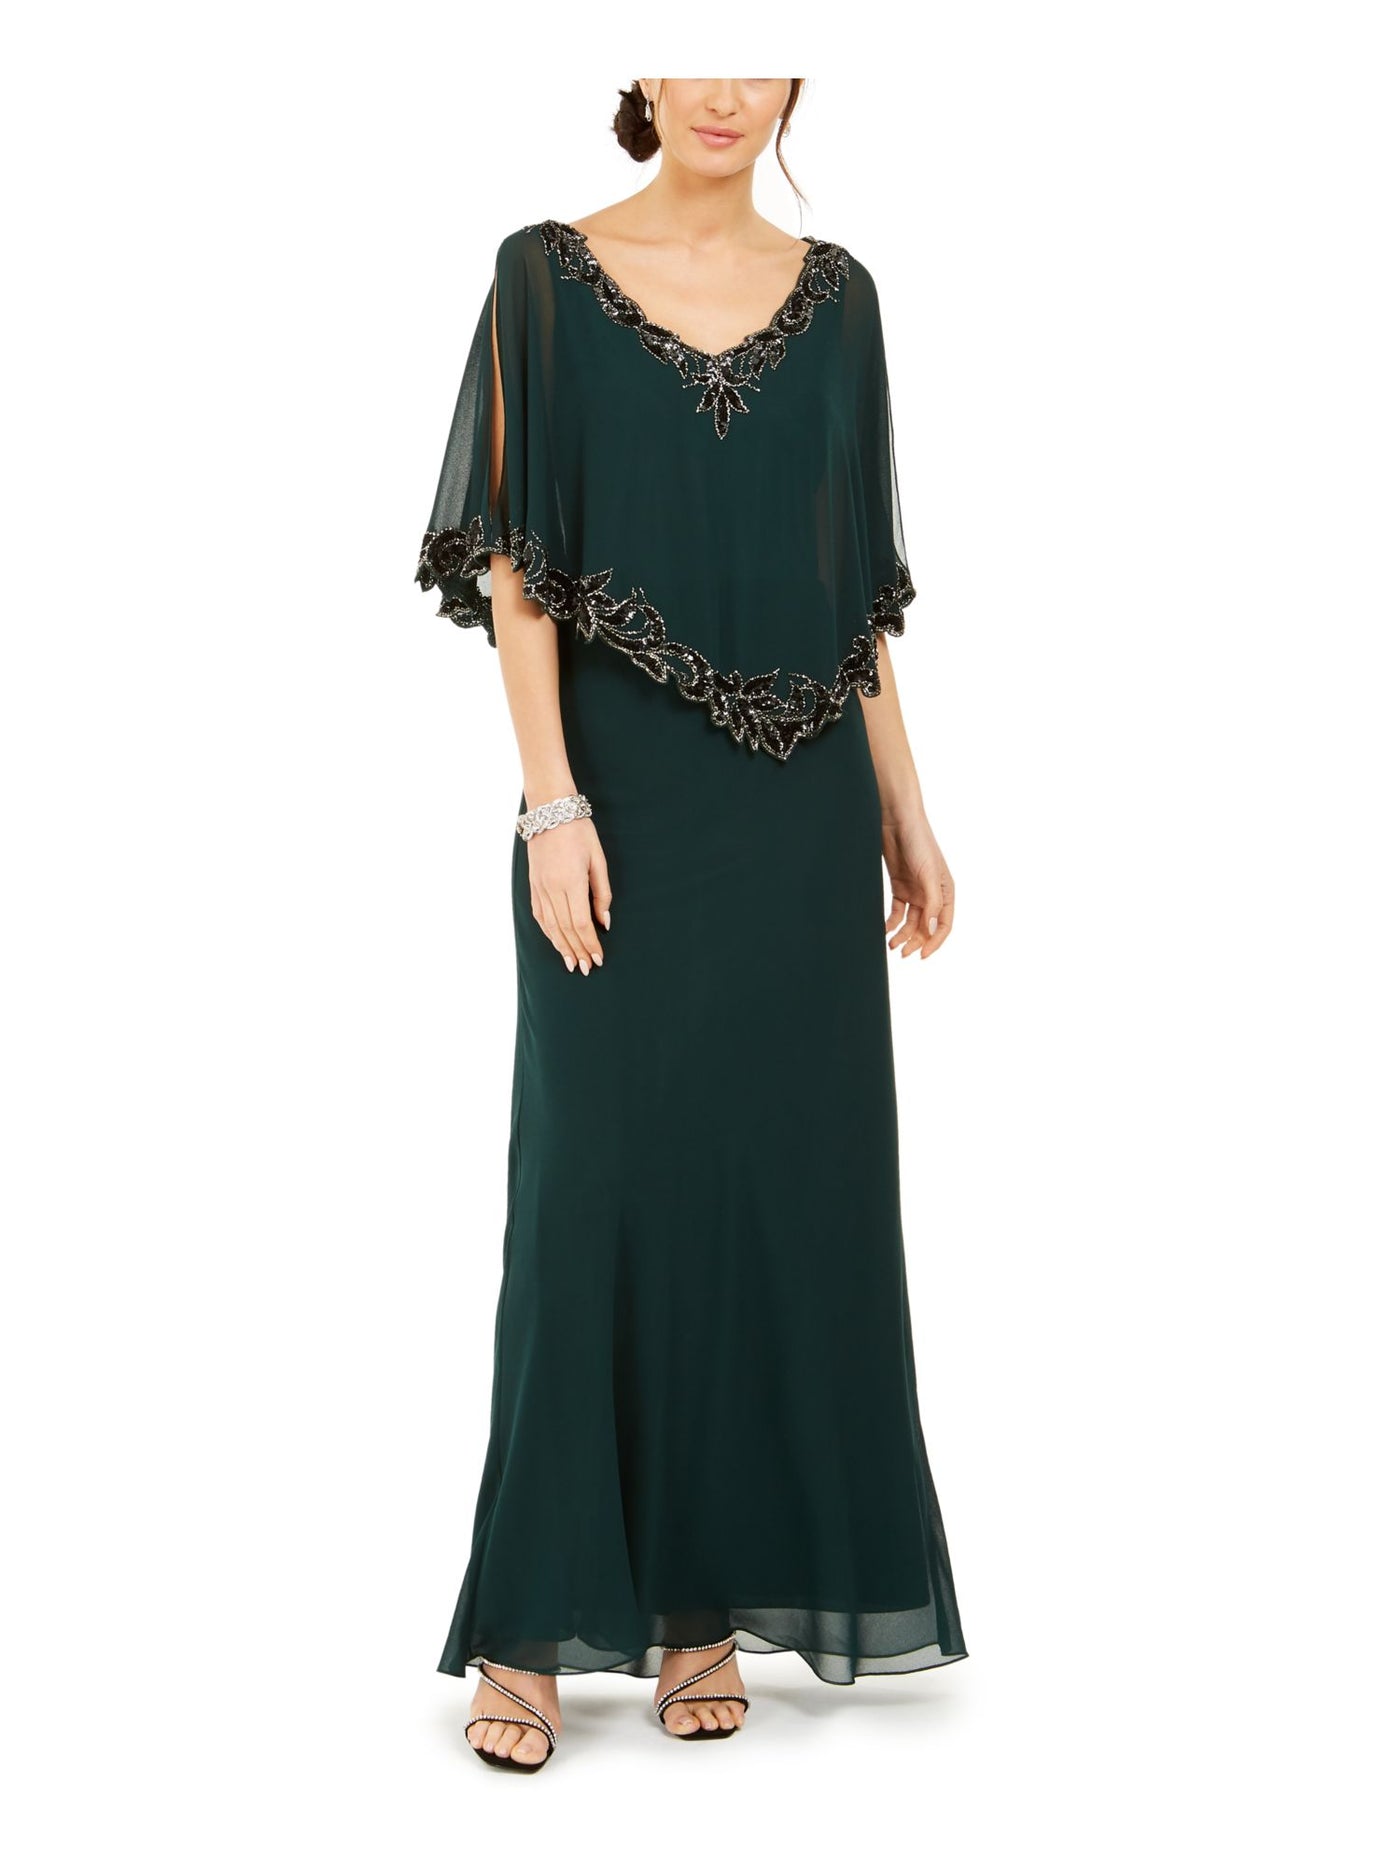 JKARA Womens Embellished Popover Cape Sleeveless V Neck Full-Length Formal Fit + Flare Dress